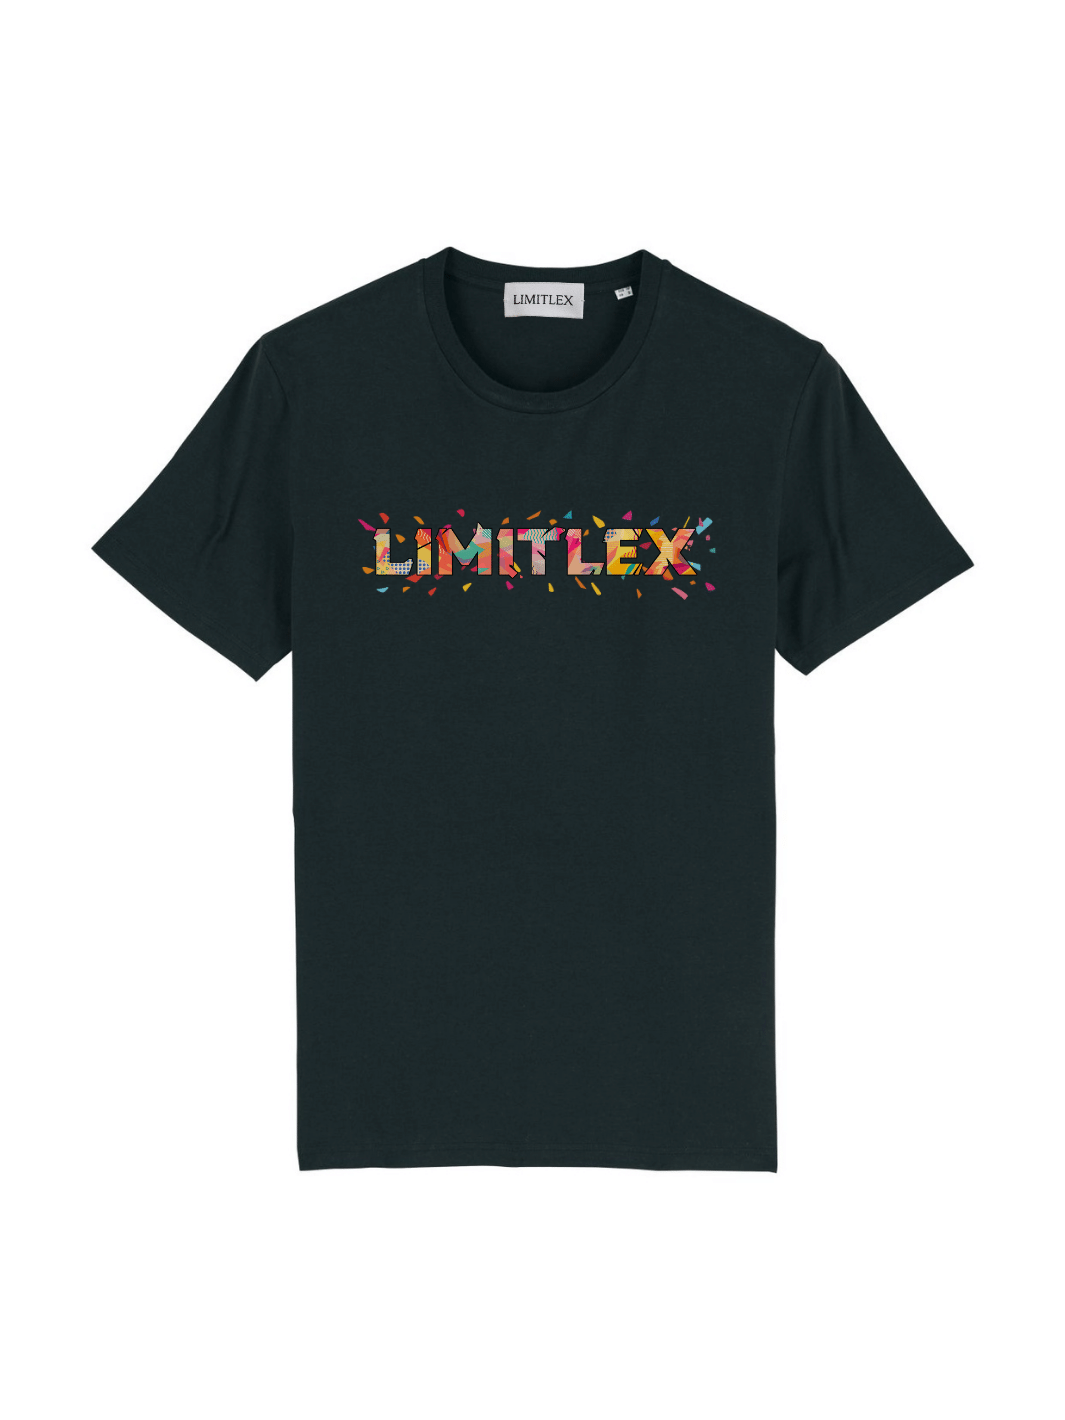 Limitlex essential tee